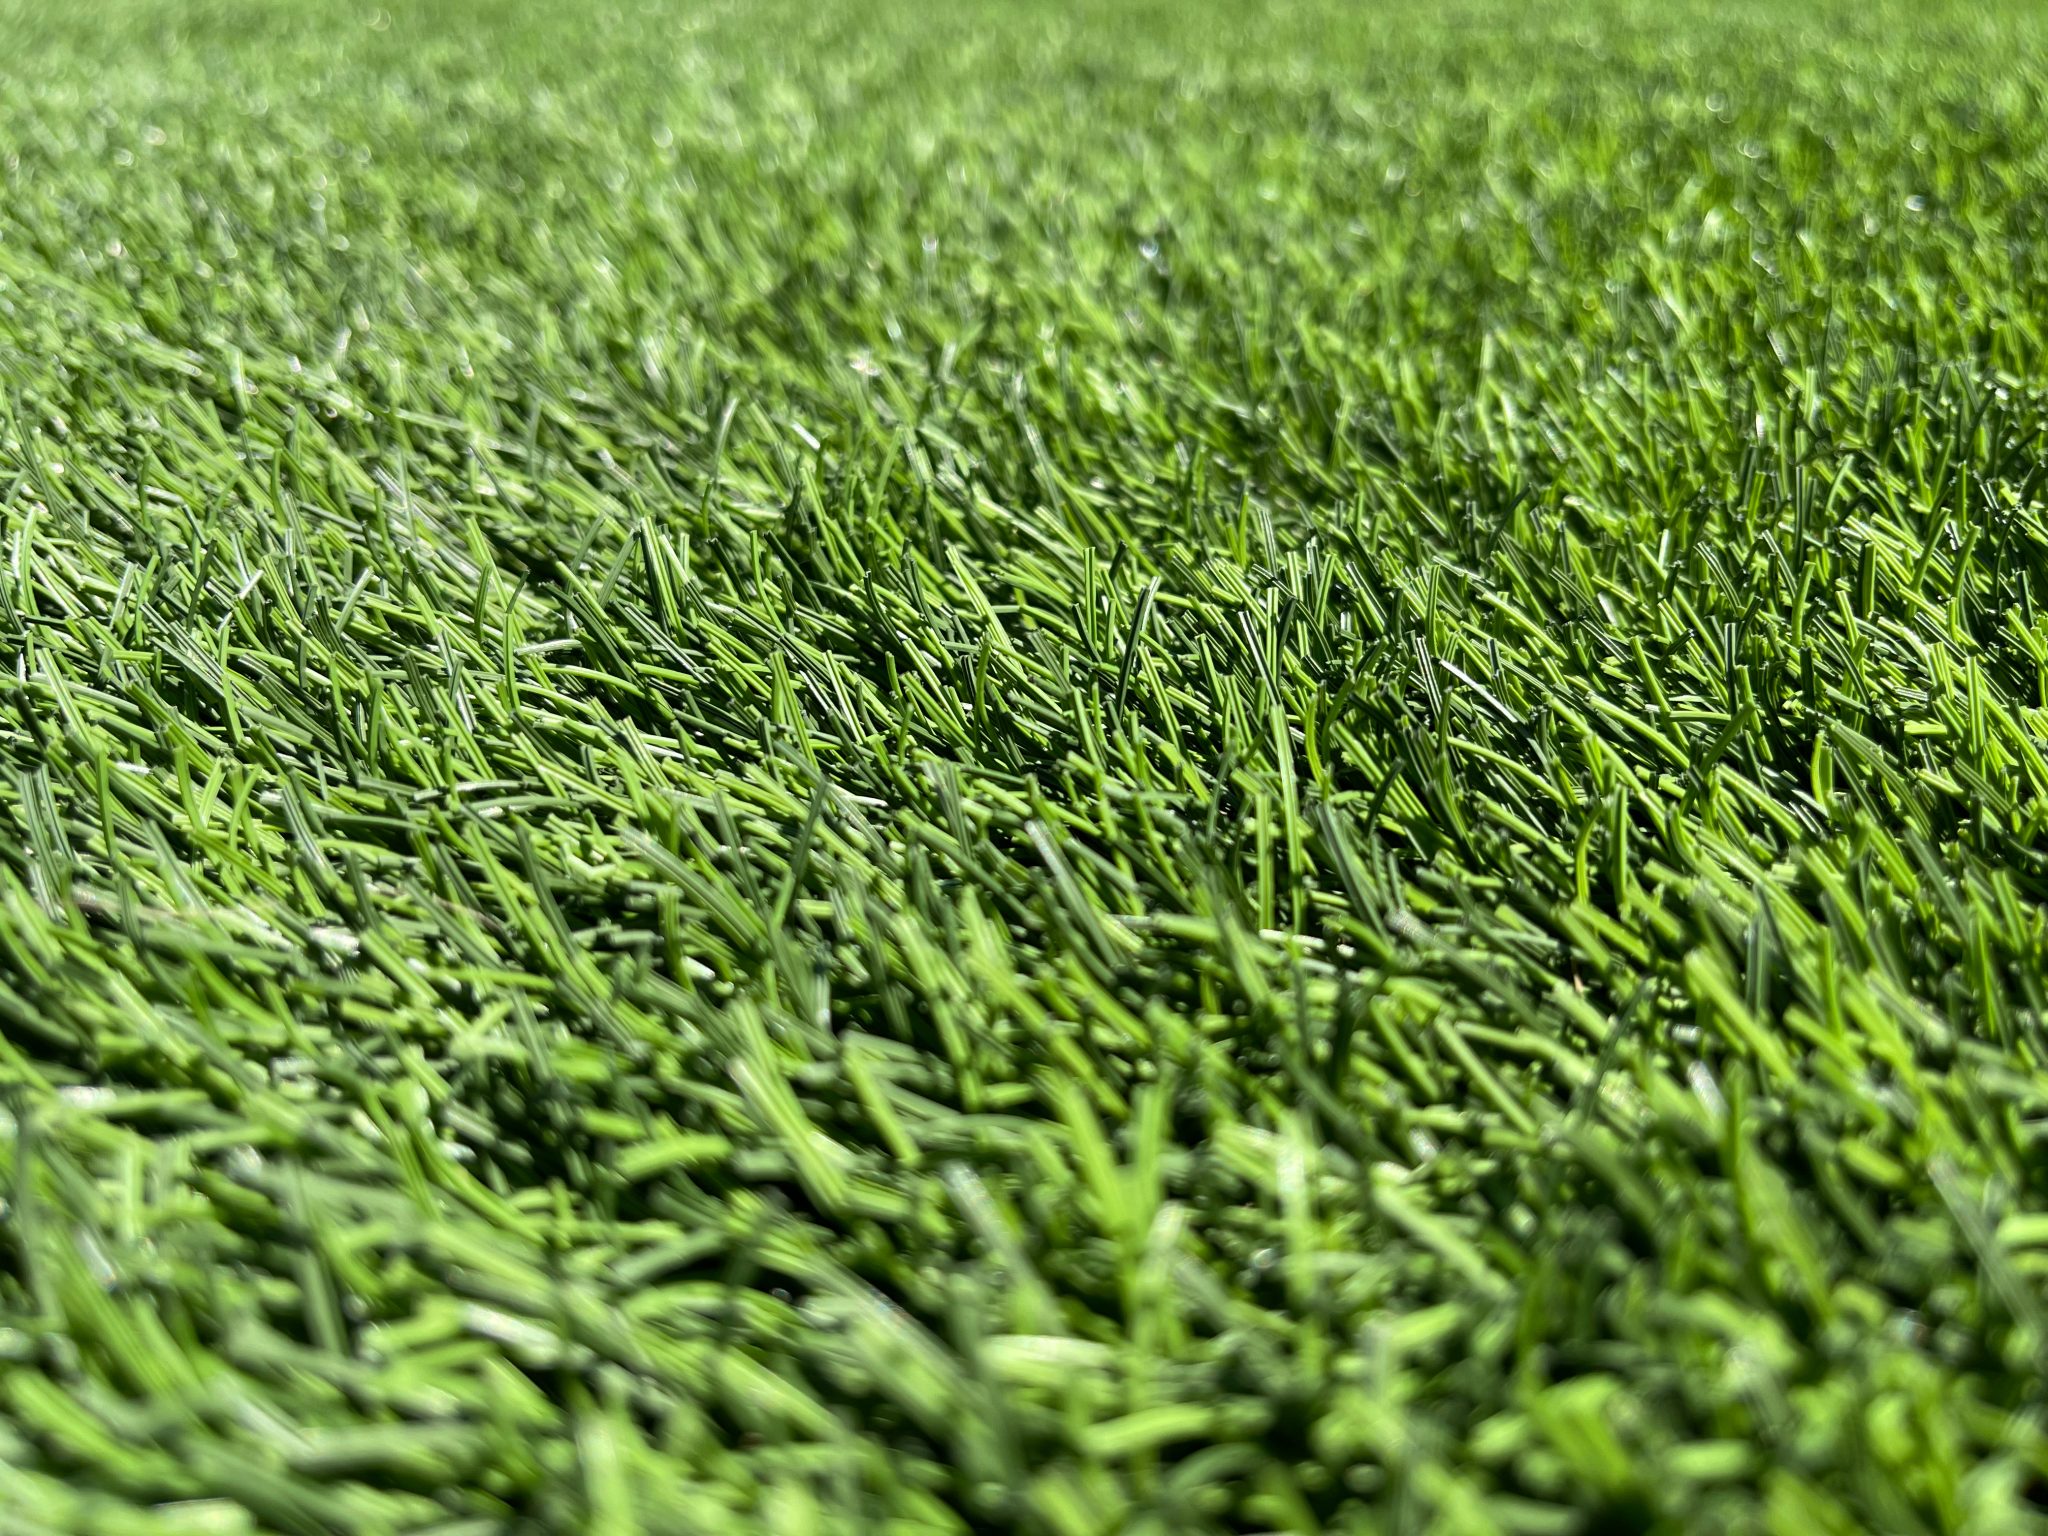 Closeup of astroturf grass